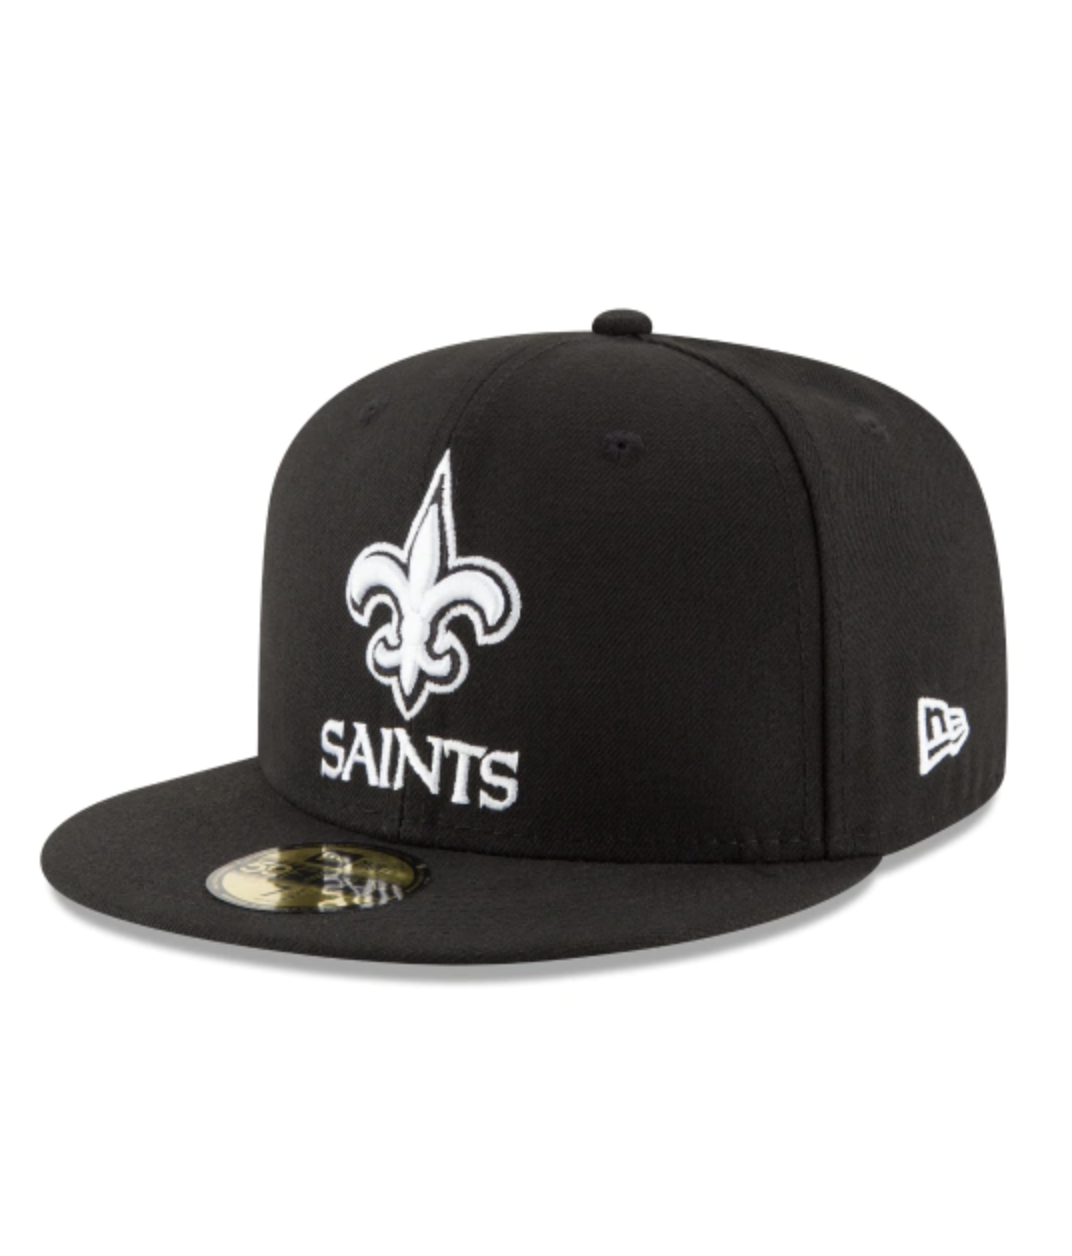 nfl saints cap